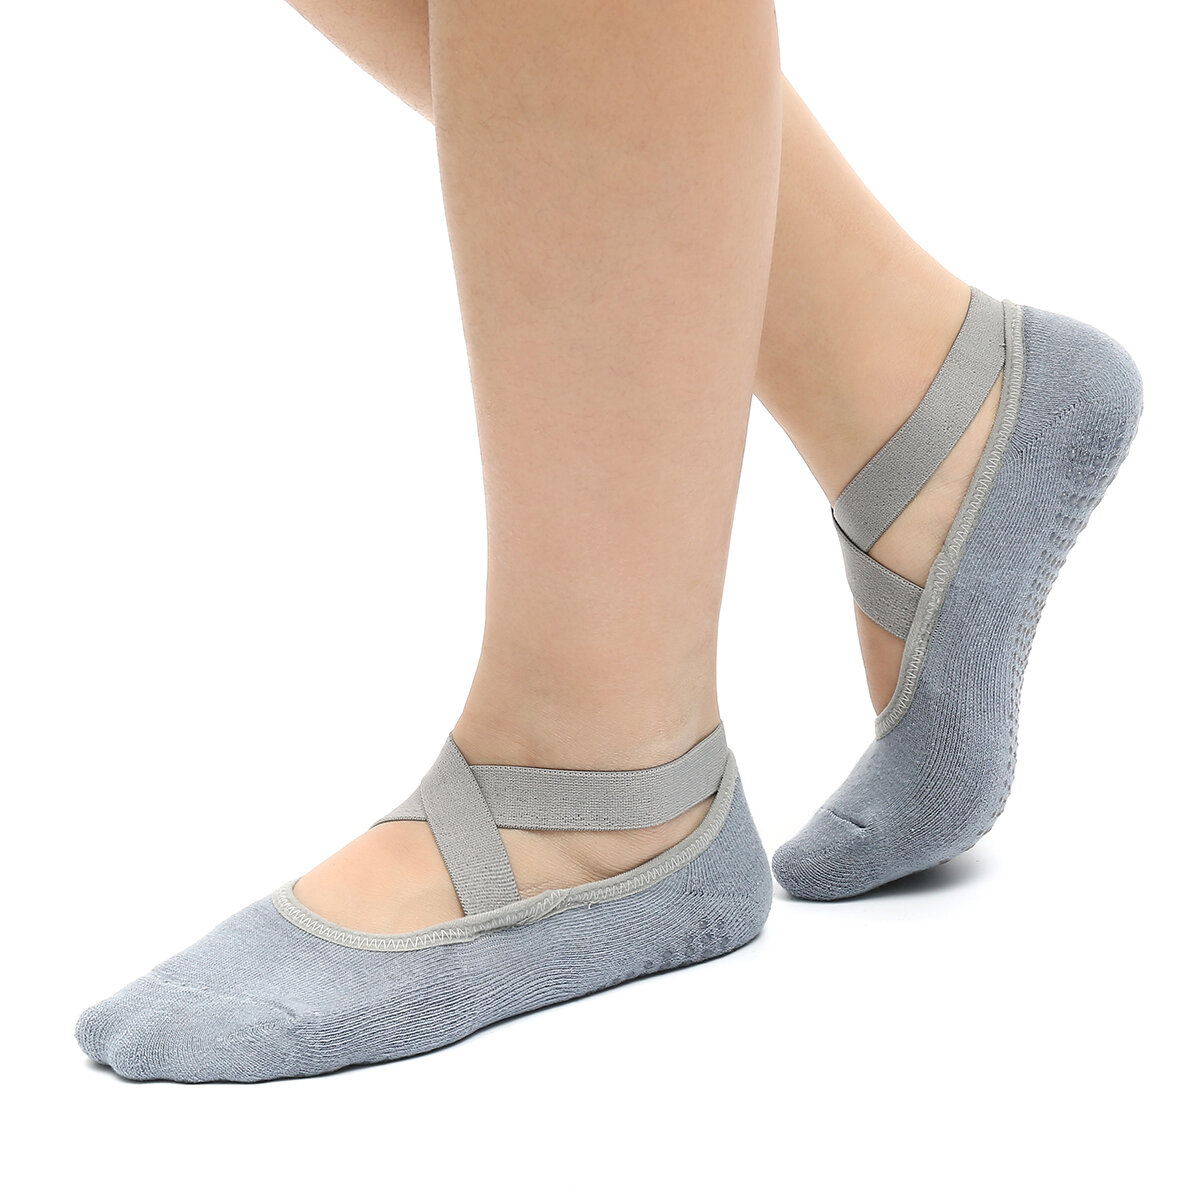 CHARMINER 2PCS/3PCS Cross-strap Yoga Socks Non-slip and Breathable Suitable for Ballet Pilates Yoga for Female COD